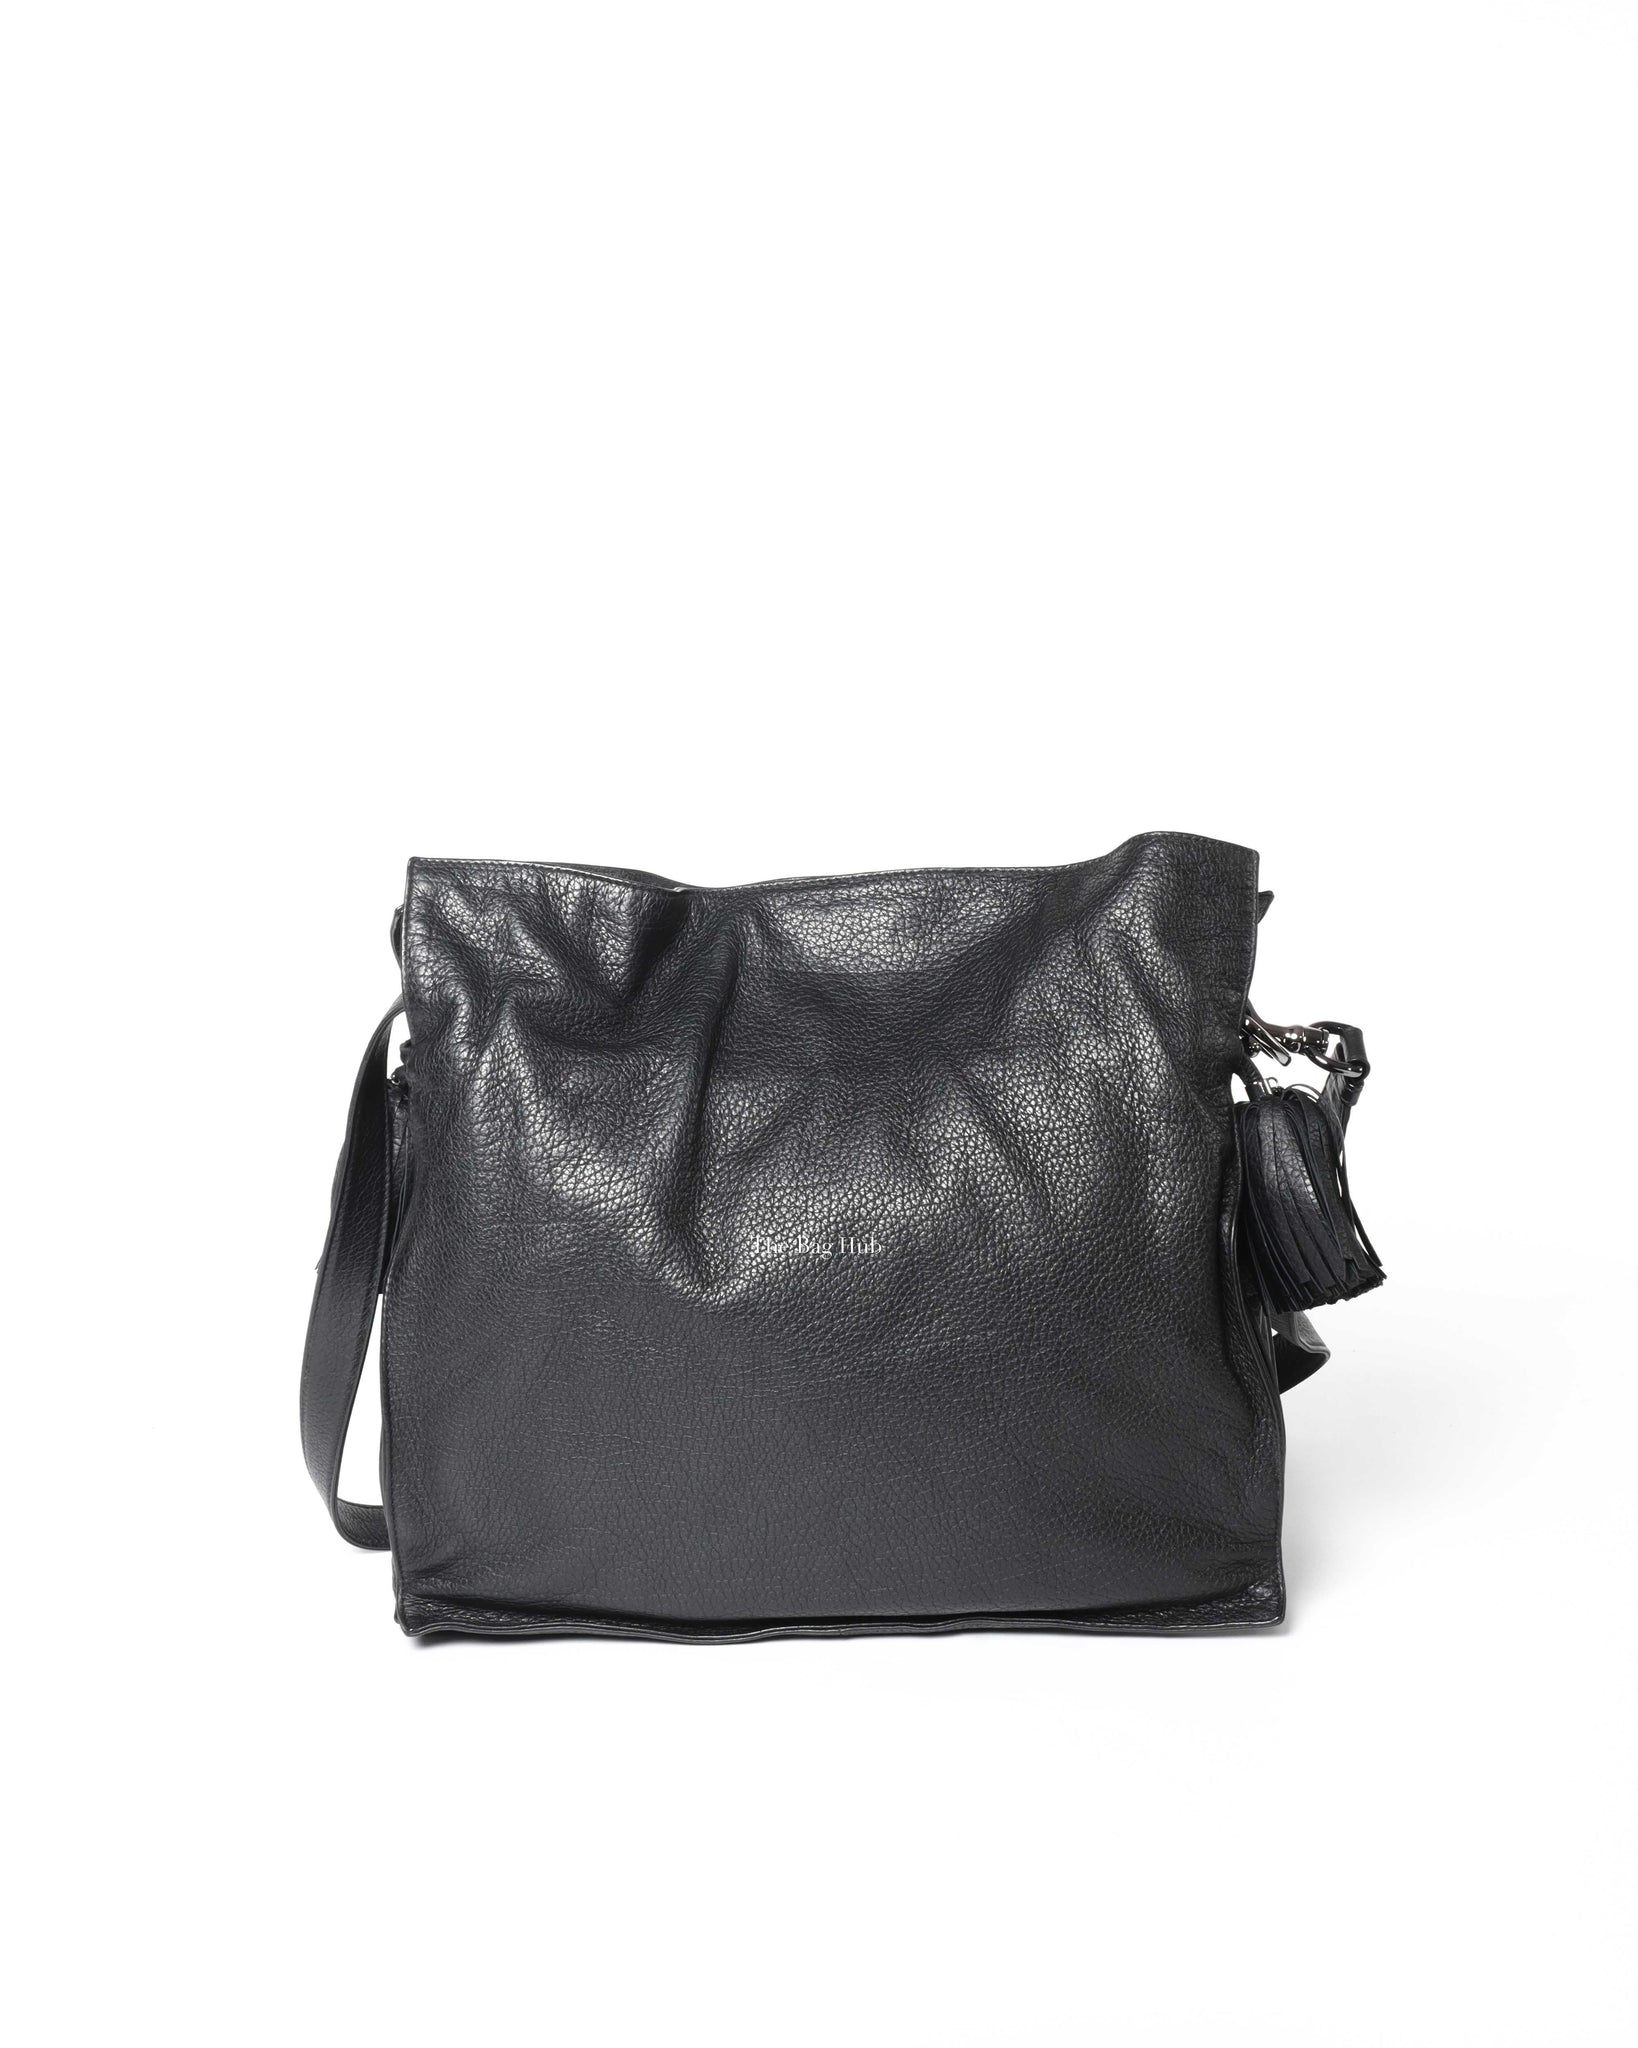 Loewe Black Grained Leather Flamenco Tassel Bag OS-3